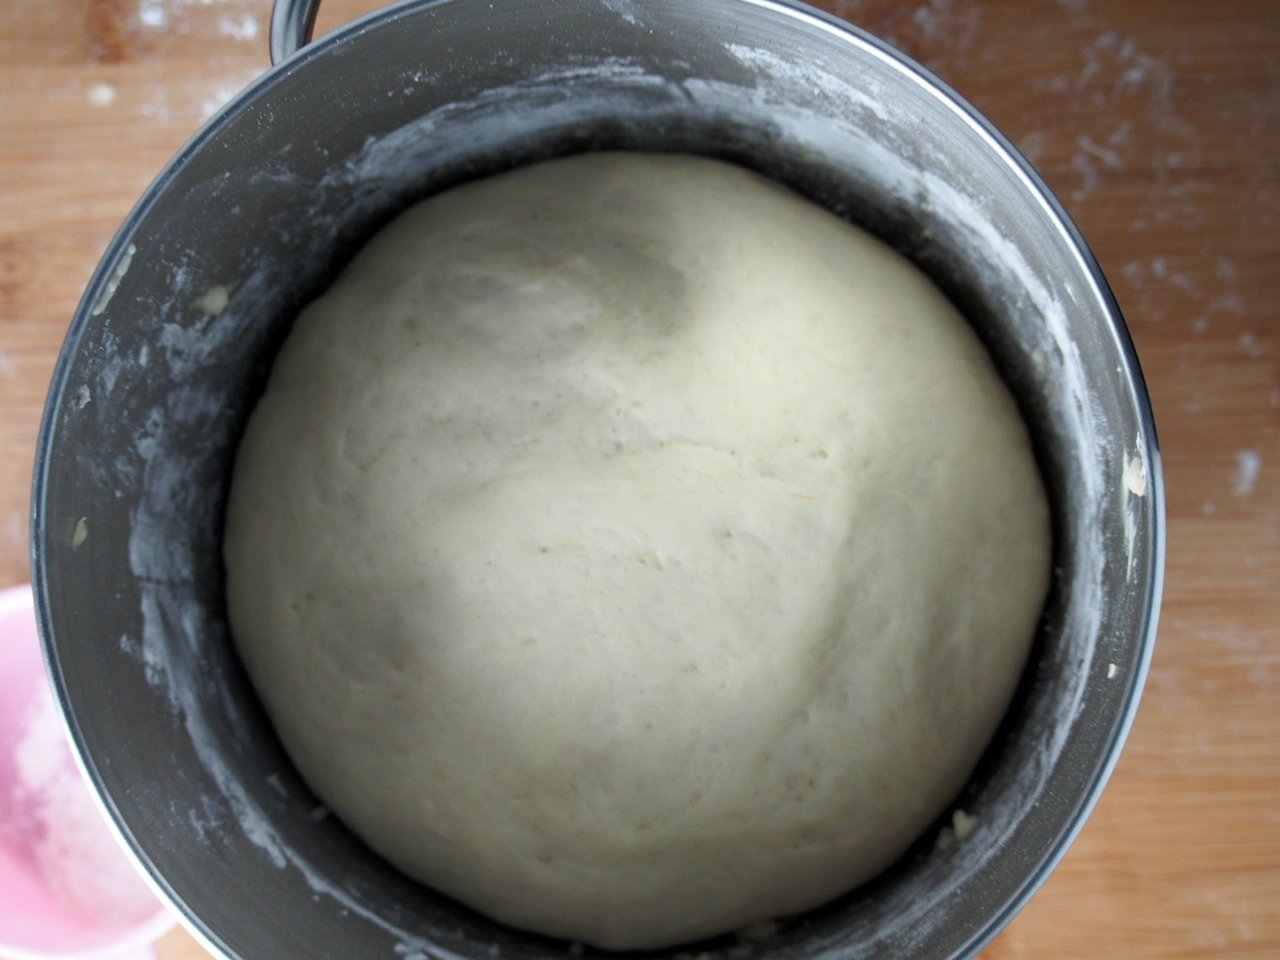 The risen dough of milk and sugar mini buns.